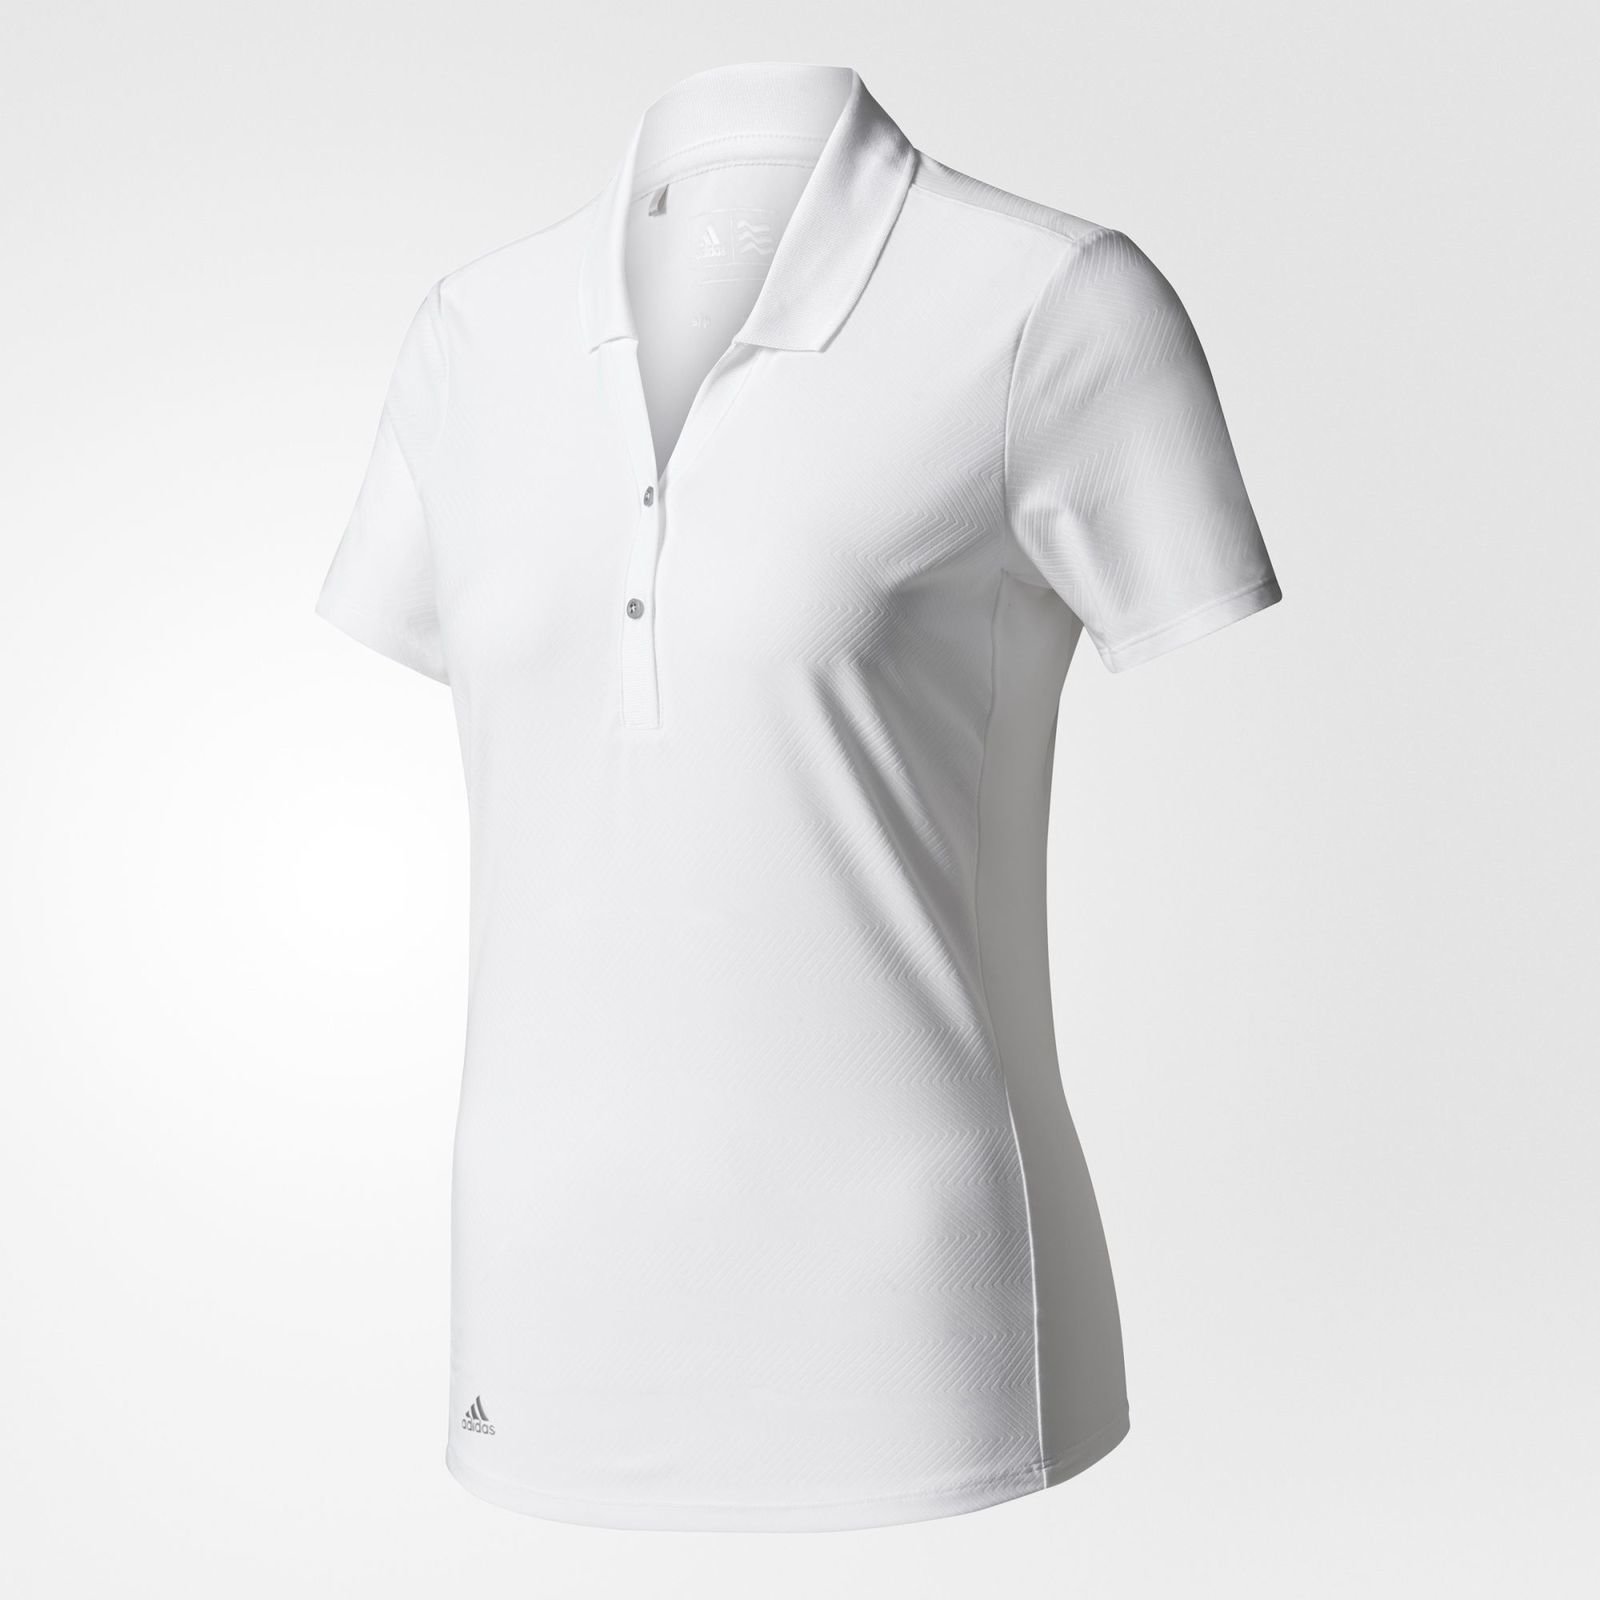 Polo trøje Adidas Essential Jacquard hvid L